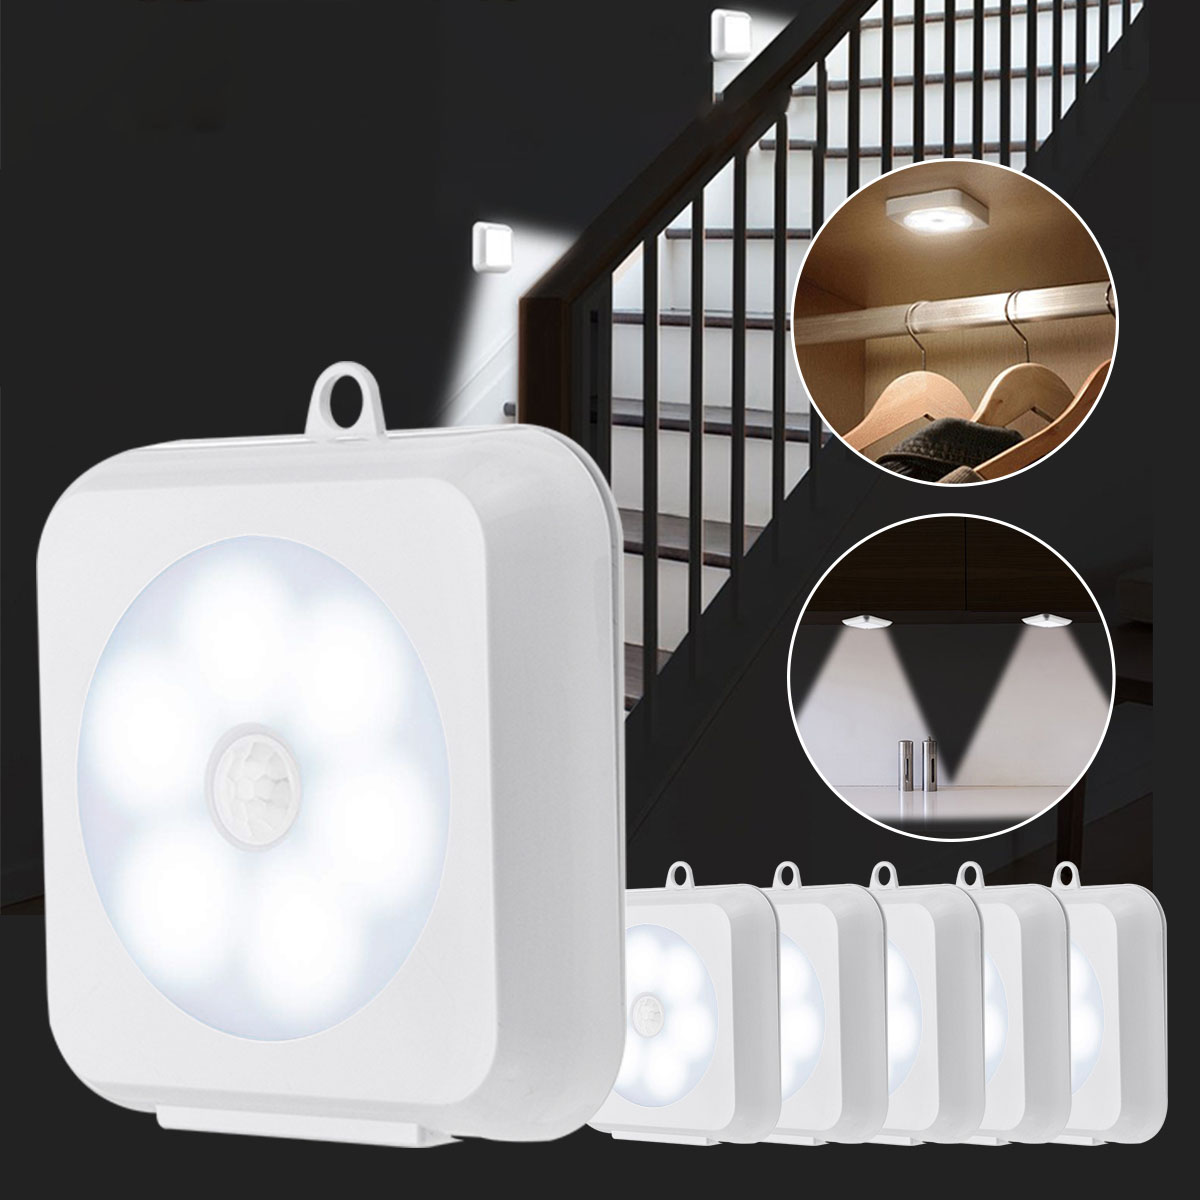 

KCASA 2W LED Шкаф Night Light Wireless PIR Motion Датчик Батарея Управляемый шкаф Шкаф Лампа Главная Спальня Кухня Освещение